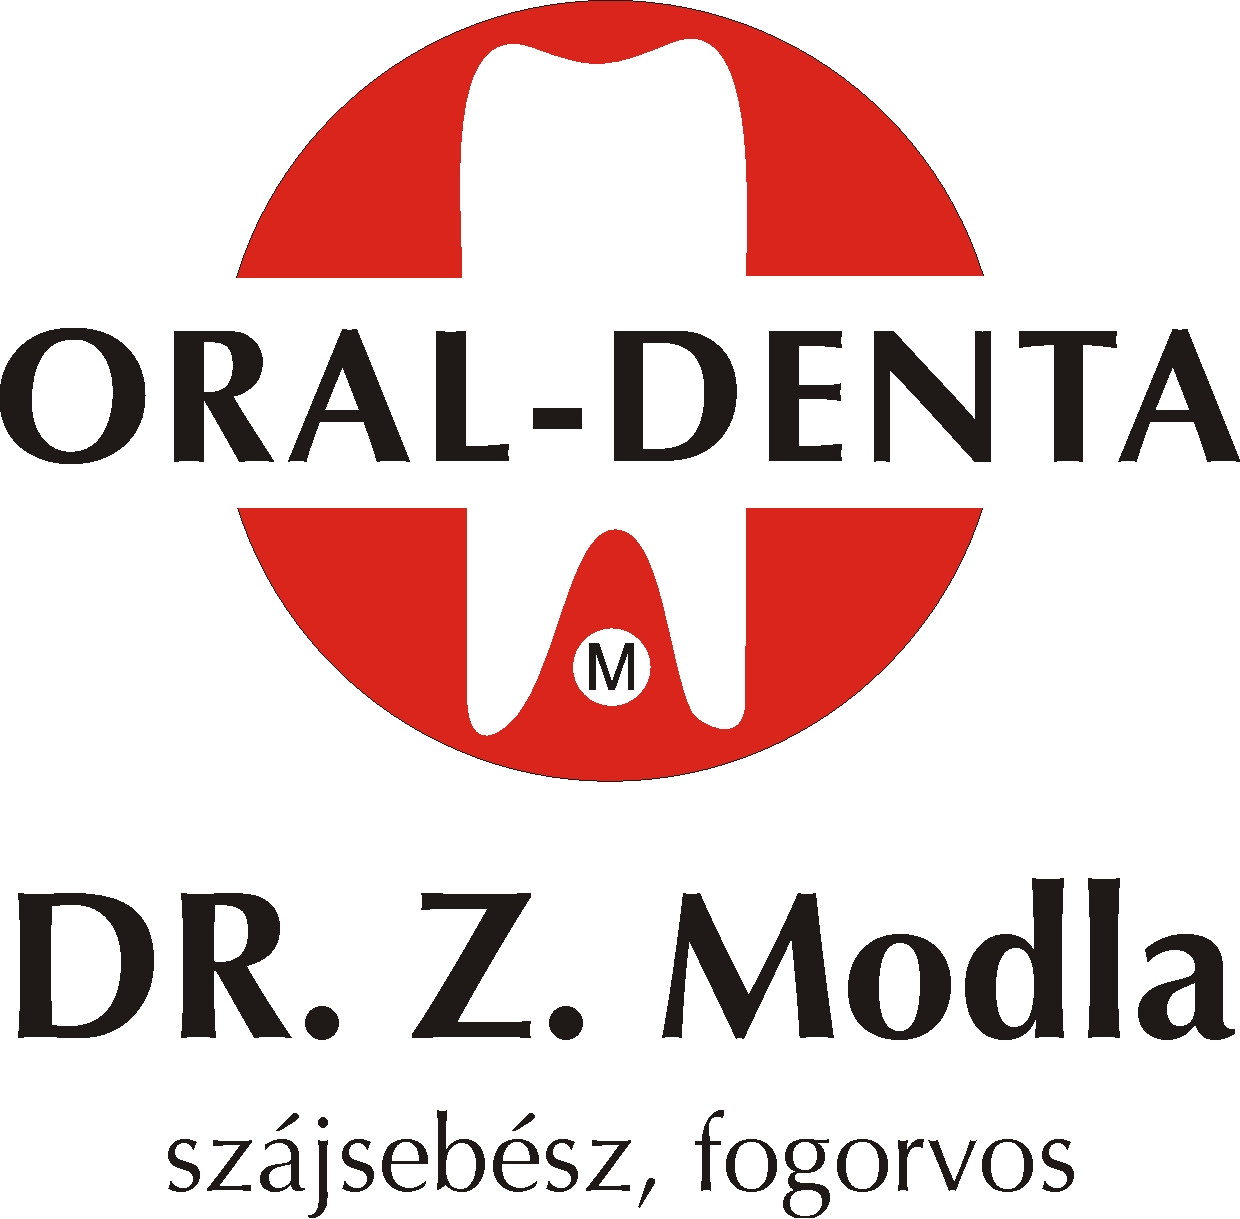 oral denta dr modla harkány